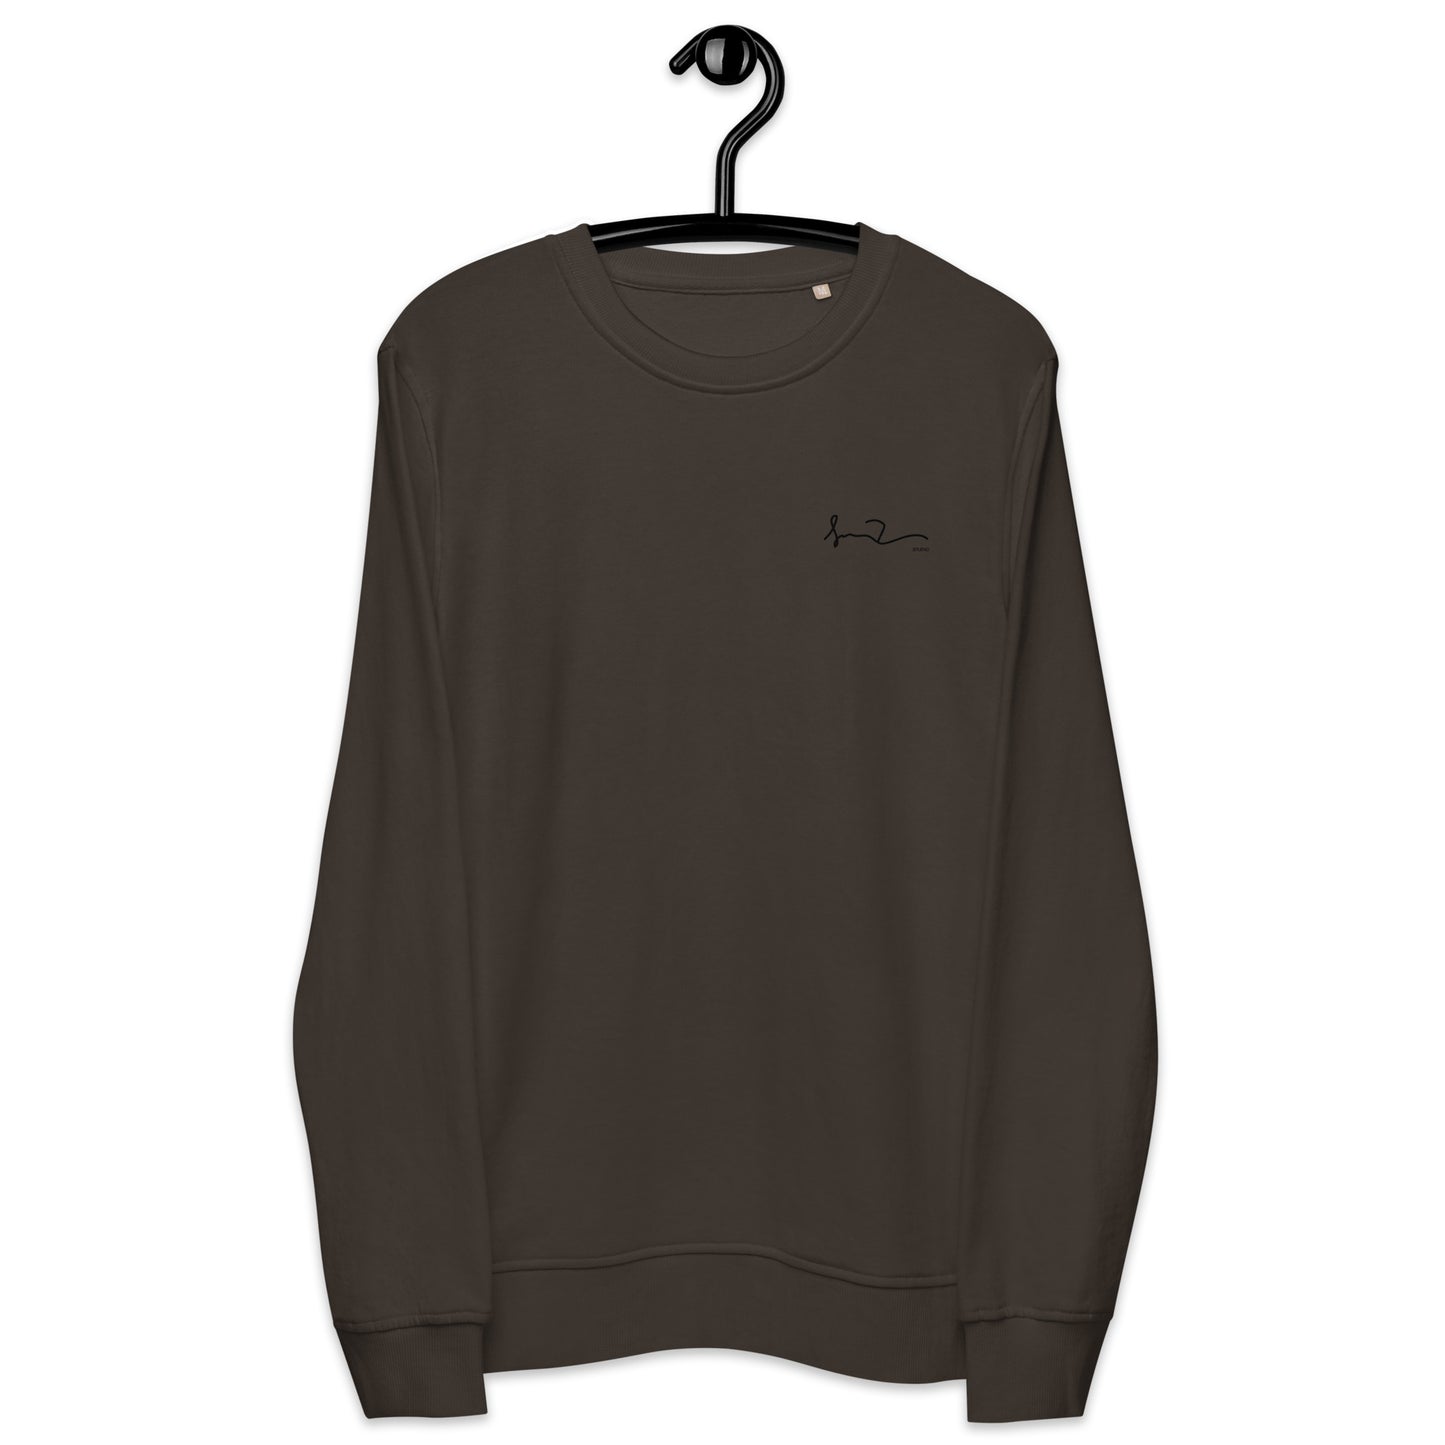 Interstellar - Unisex Organic Sweatshirt